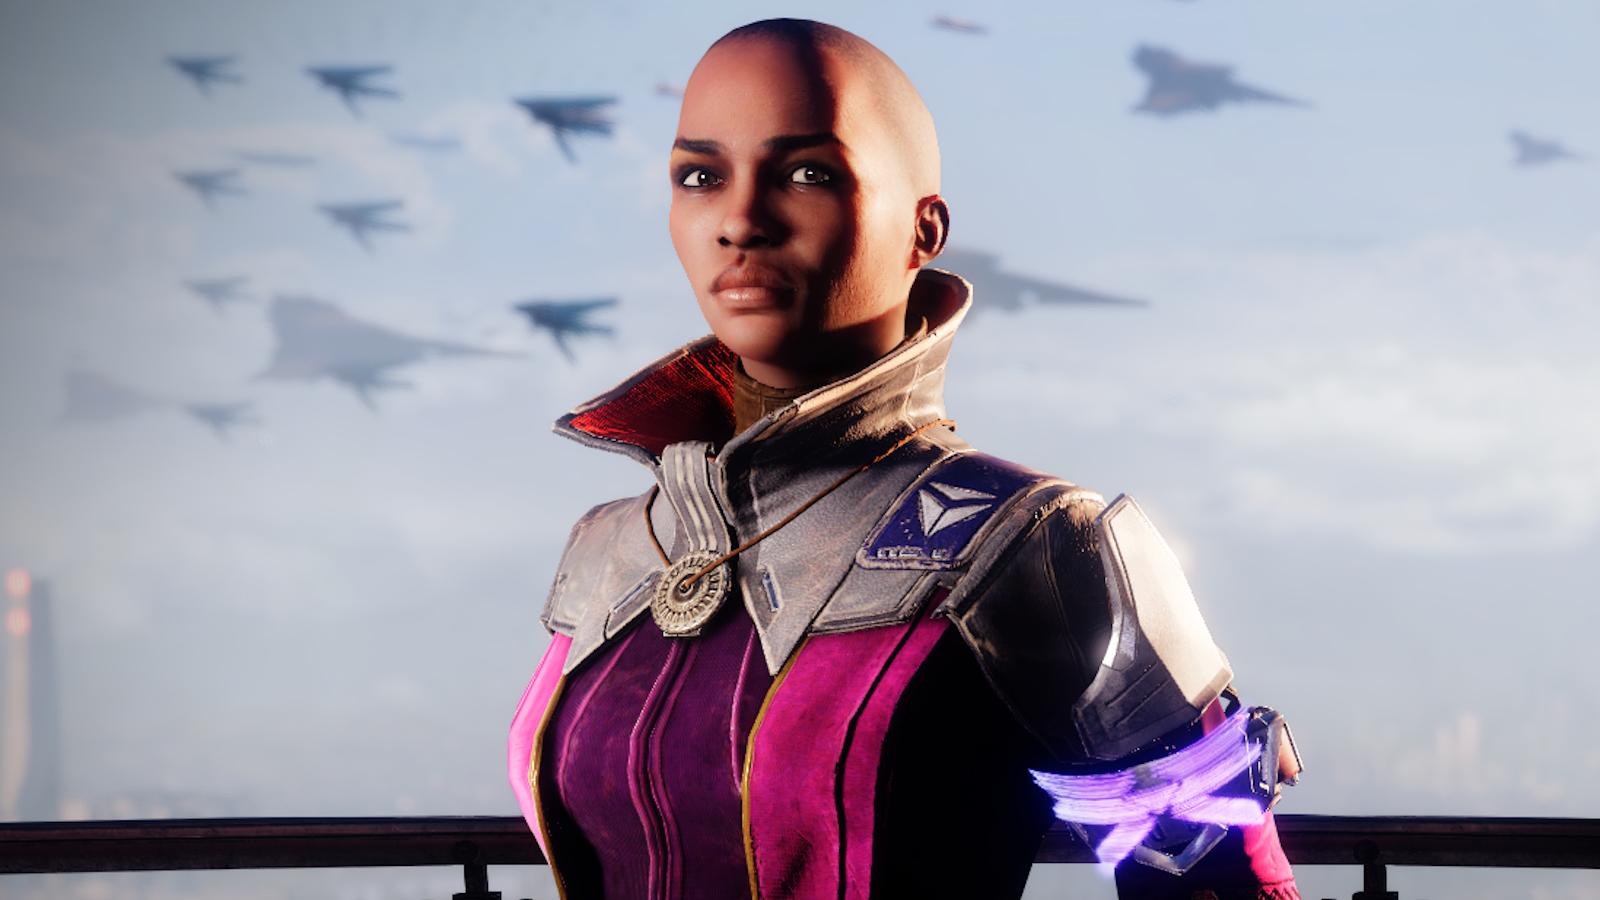 Ikora Rey, the Warlock representative in Destiny 2.